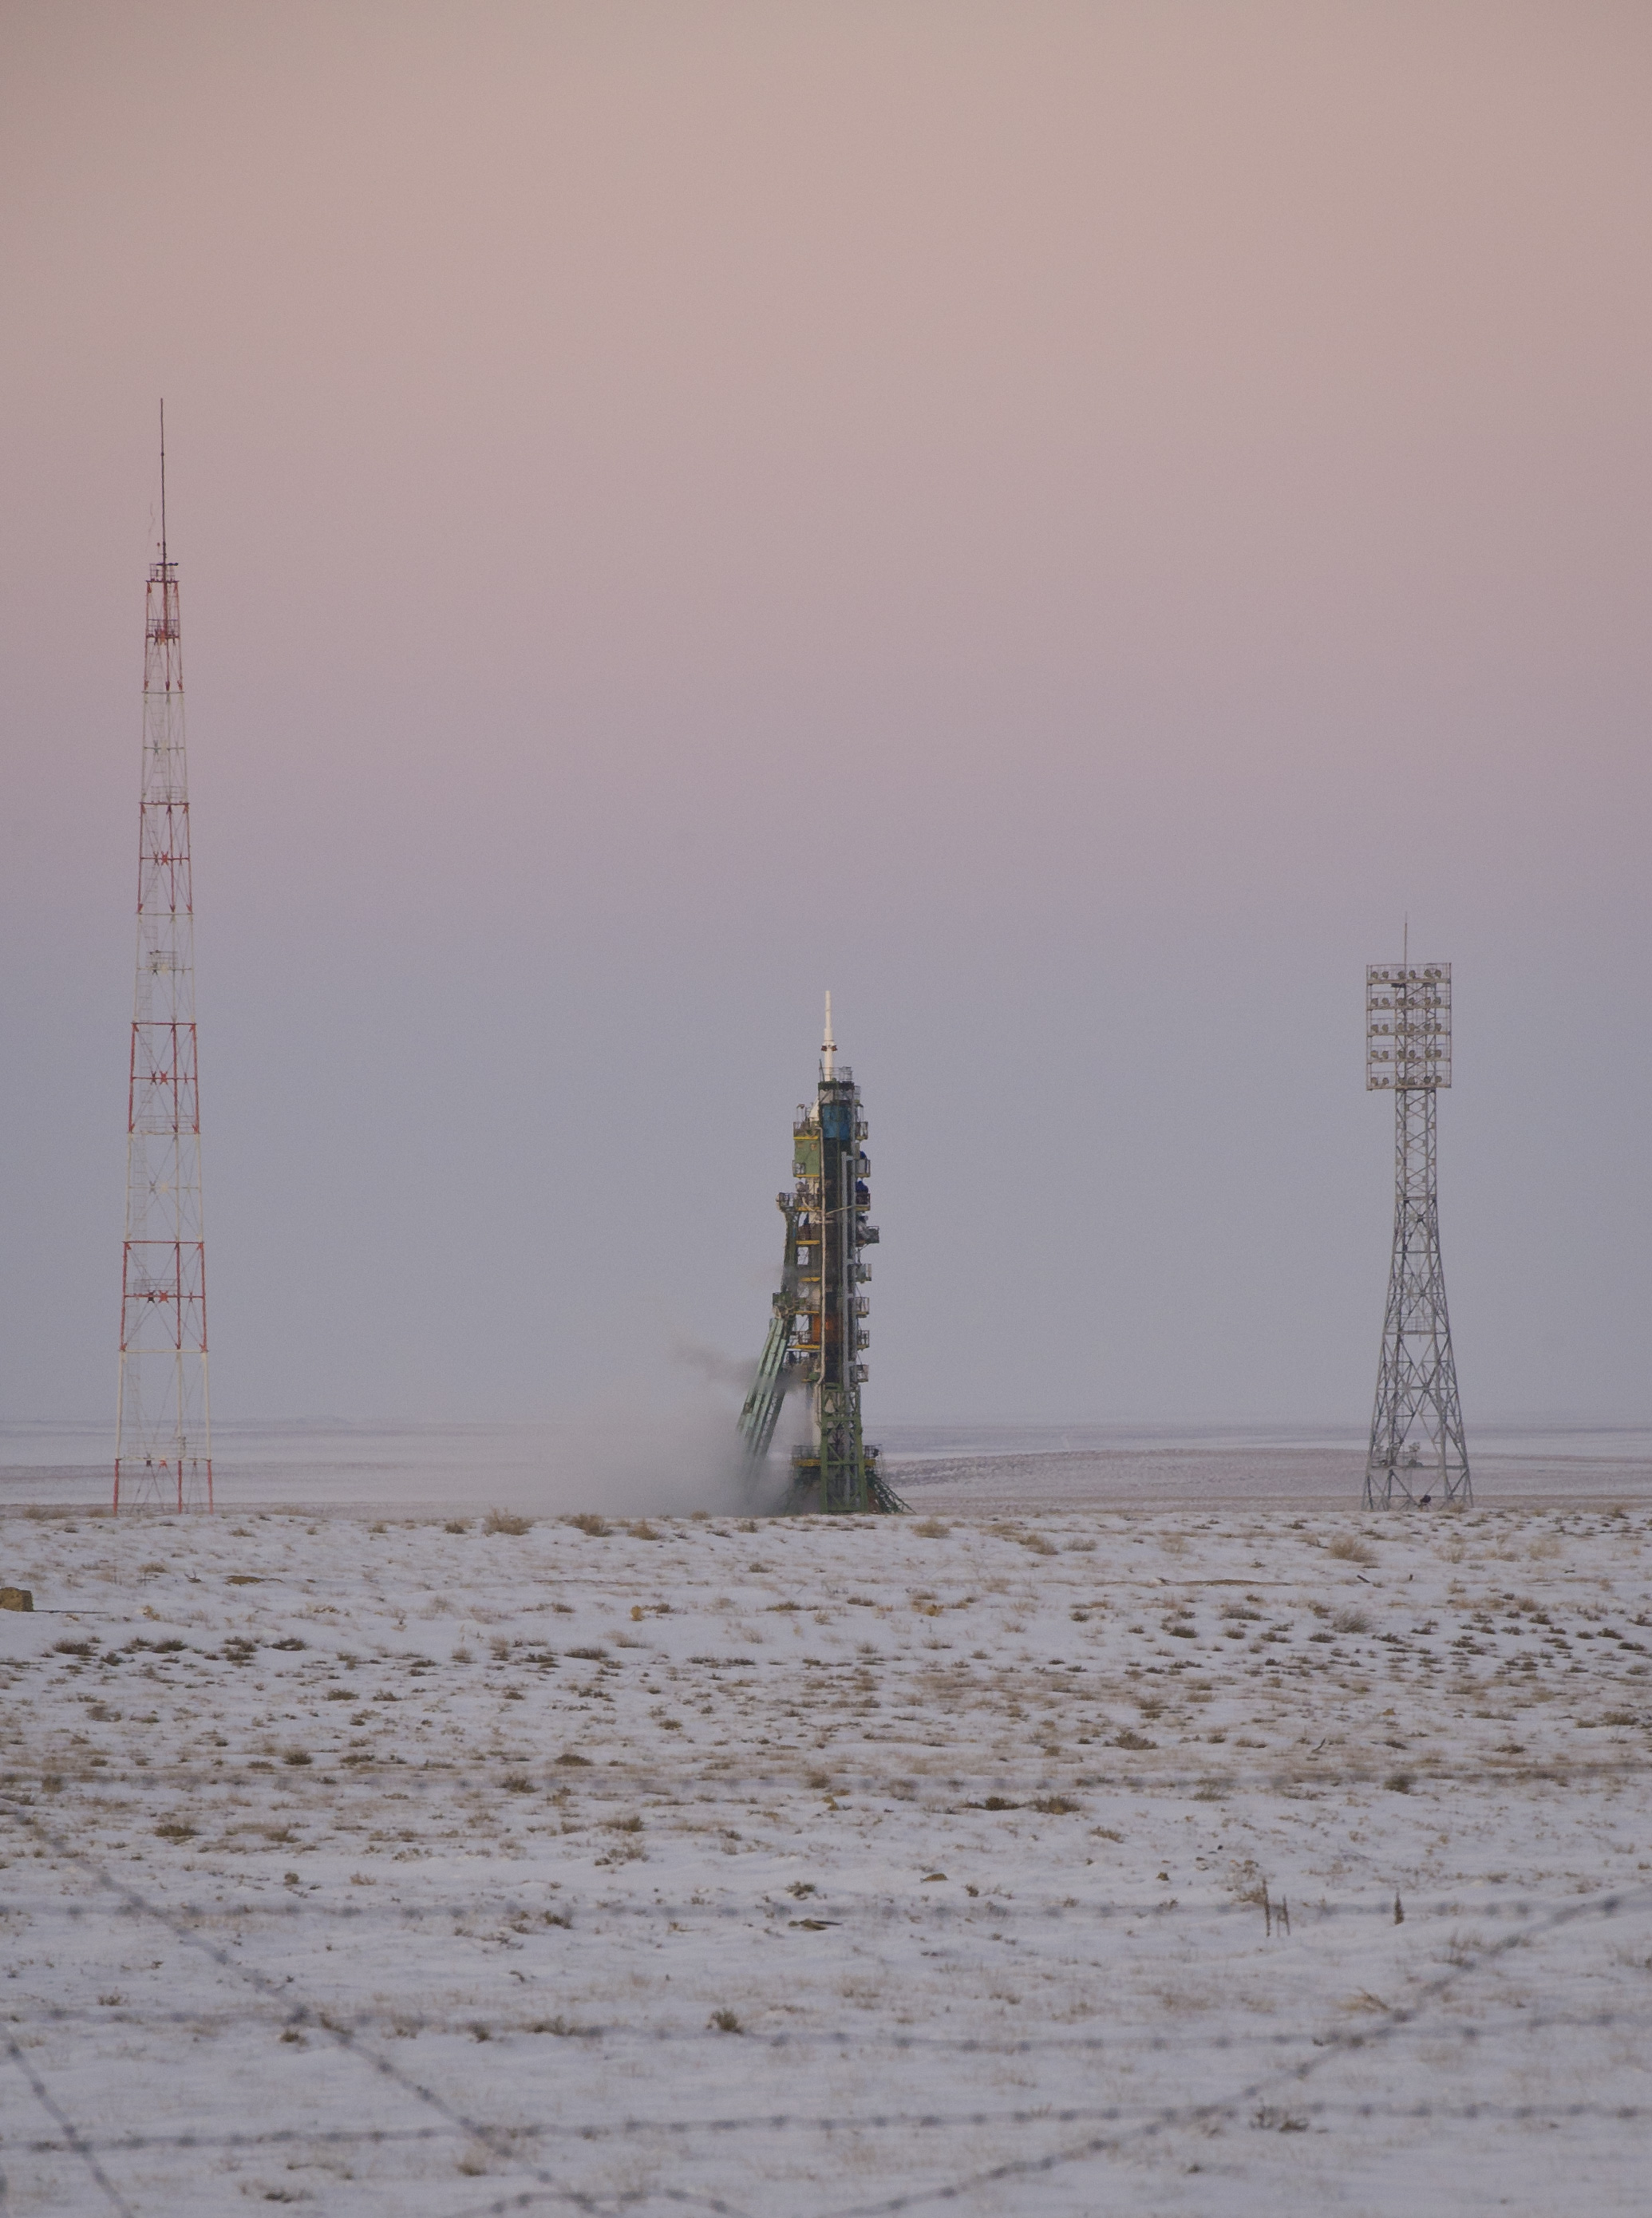  The Soyuz TMA-03M spacecraft is seen at dusk an hour before launch at the Baikonur Cosmodrome in Kazakhstan, Wednesday, Dec. 21, 2011. The crew of Expedition 30, NASA Flight Engineer Don Pettit, Soyuz Commander Oleg Konenko, ESA (European Space Agen